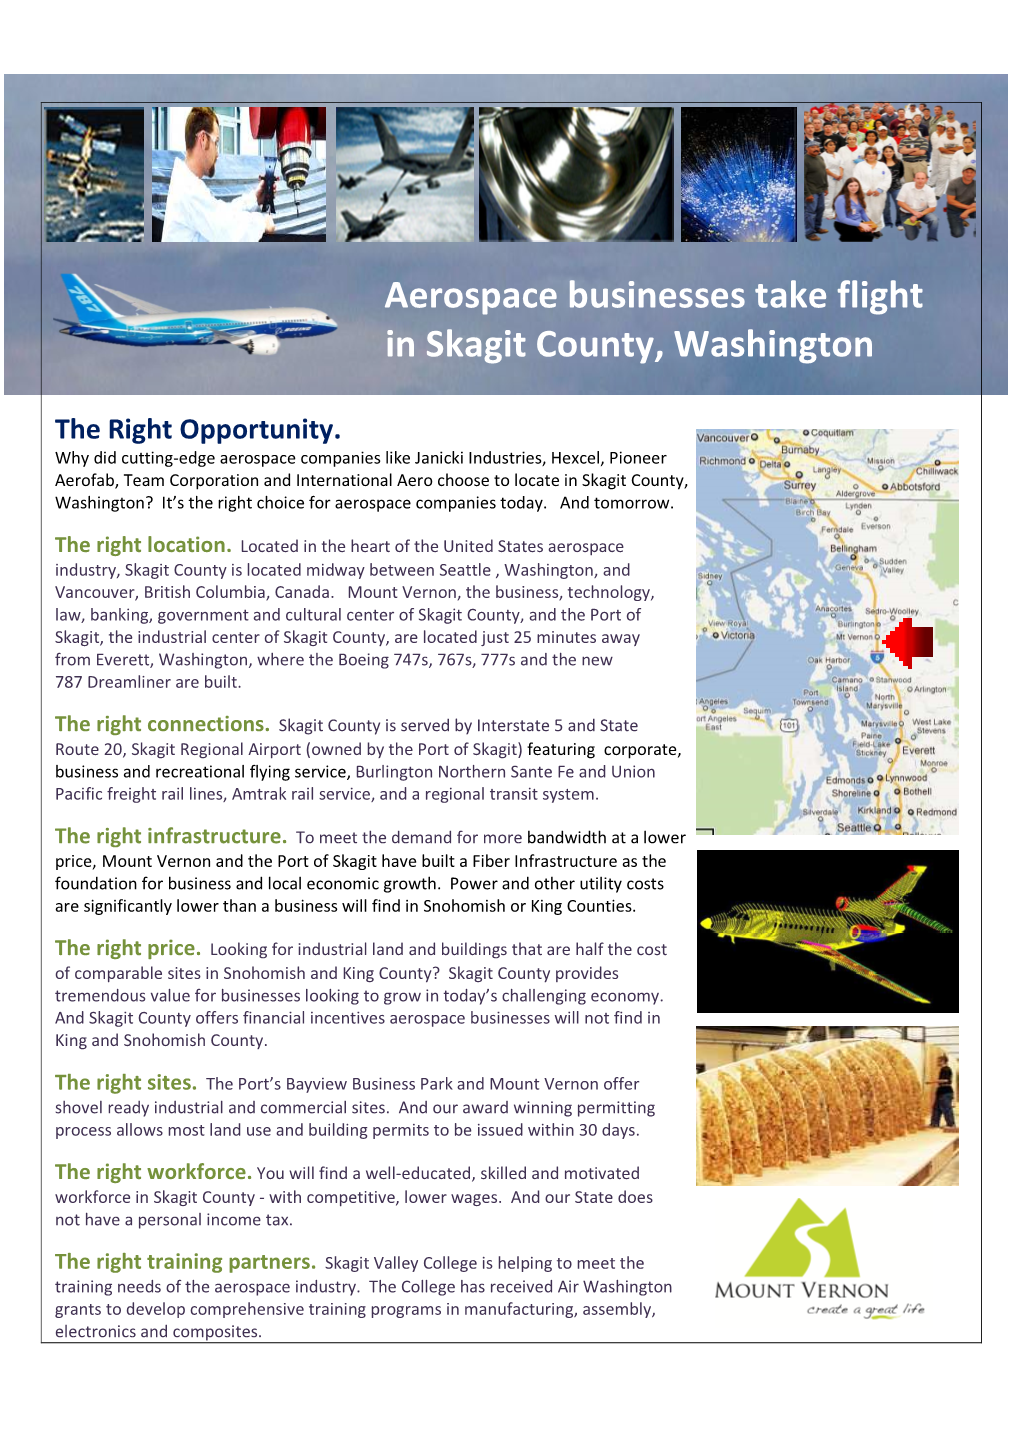 Aerospace Businesses Take Flight in Skagit County, Washington